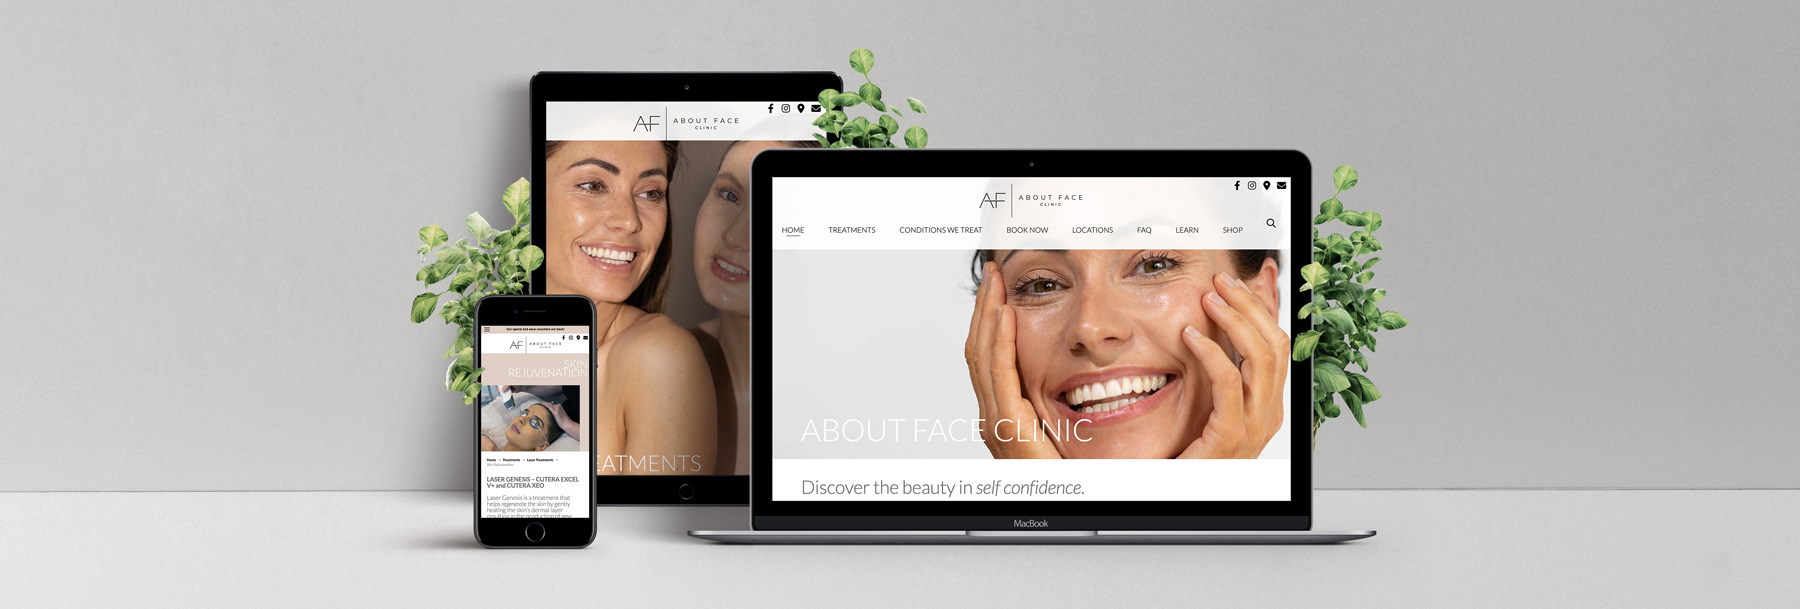 About Face Clinic website by Kirstie Wyatt, Wyatt Creative